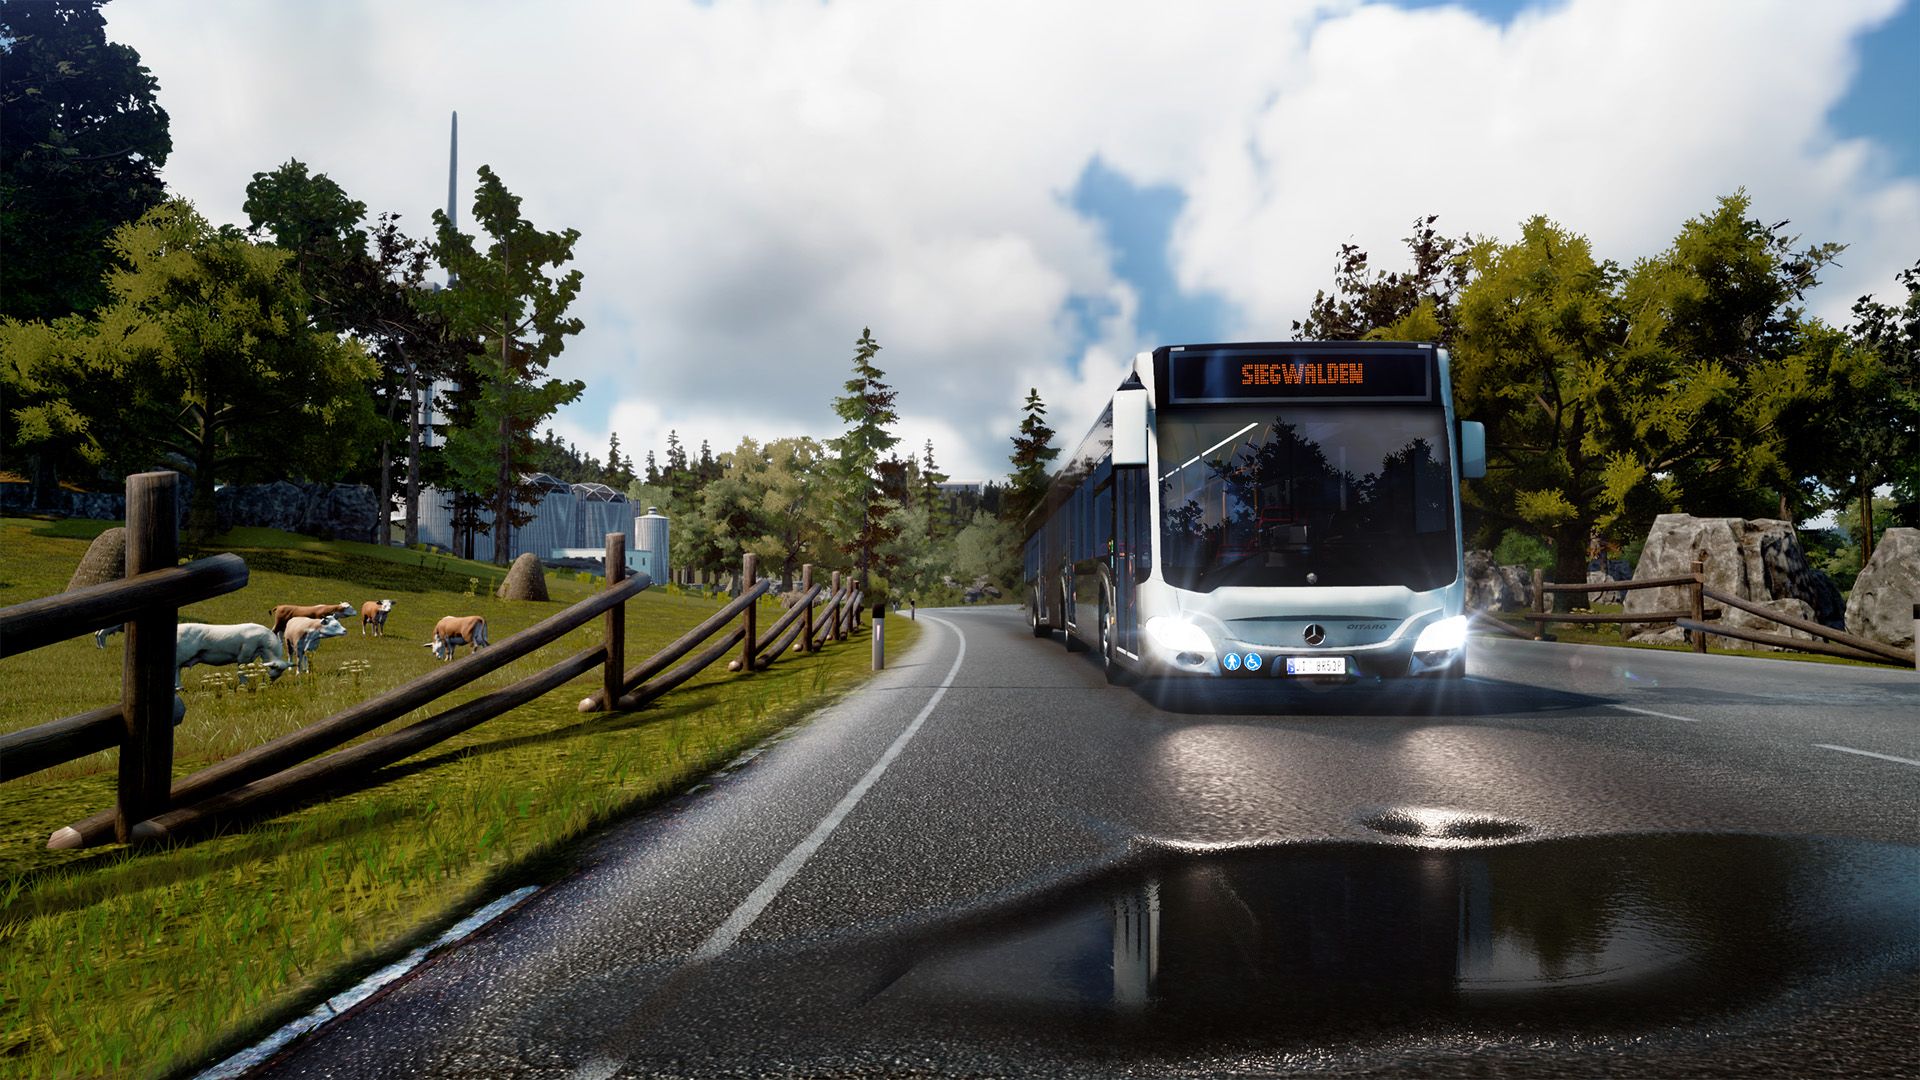 Bus Simulator 18 on Steam